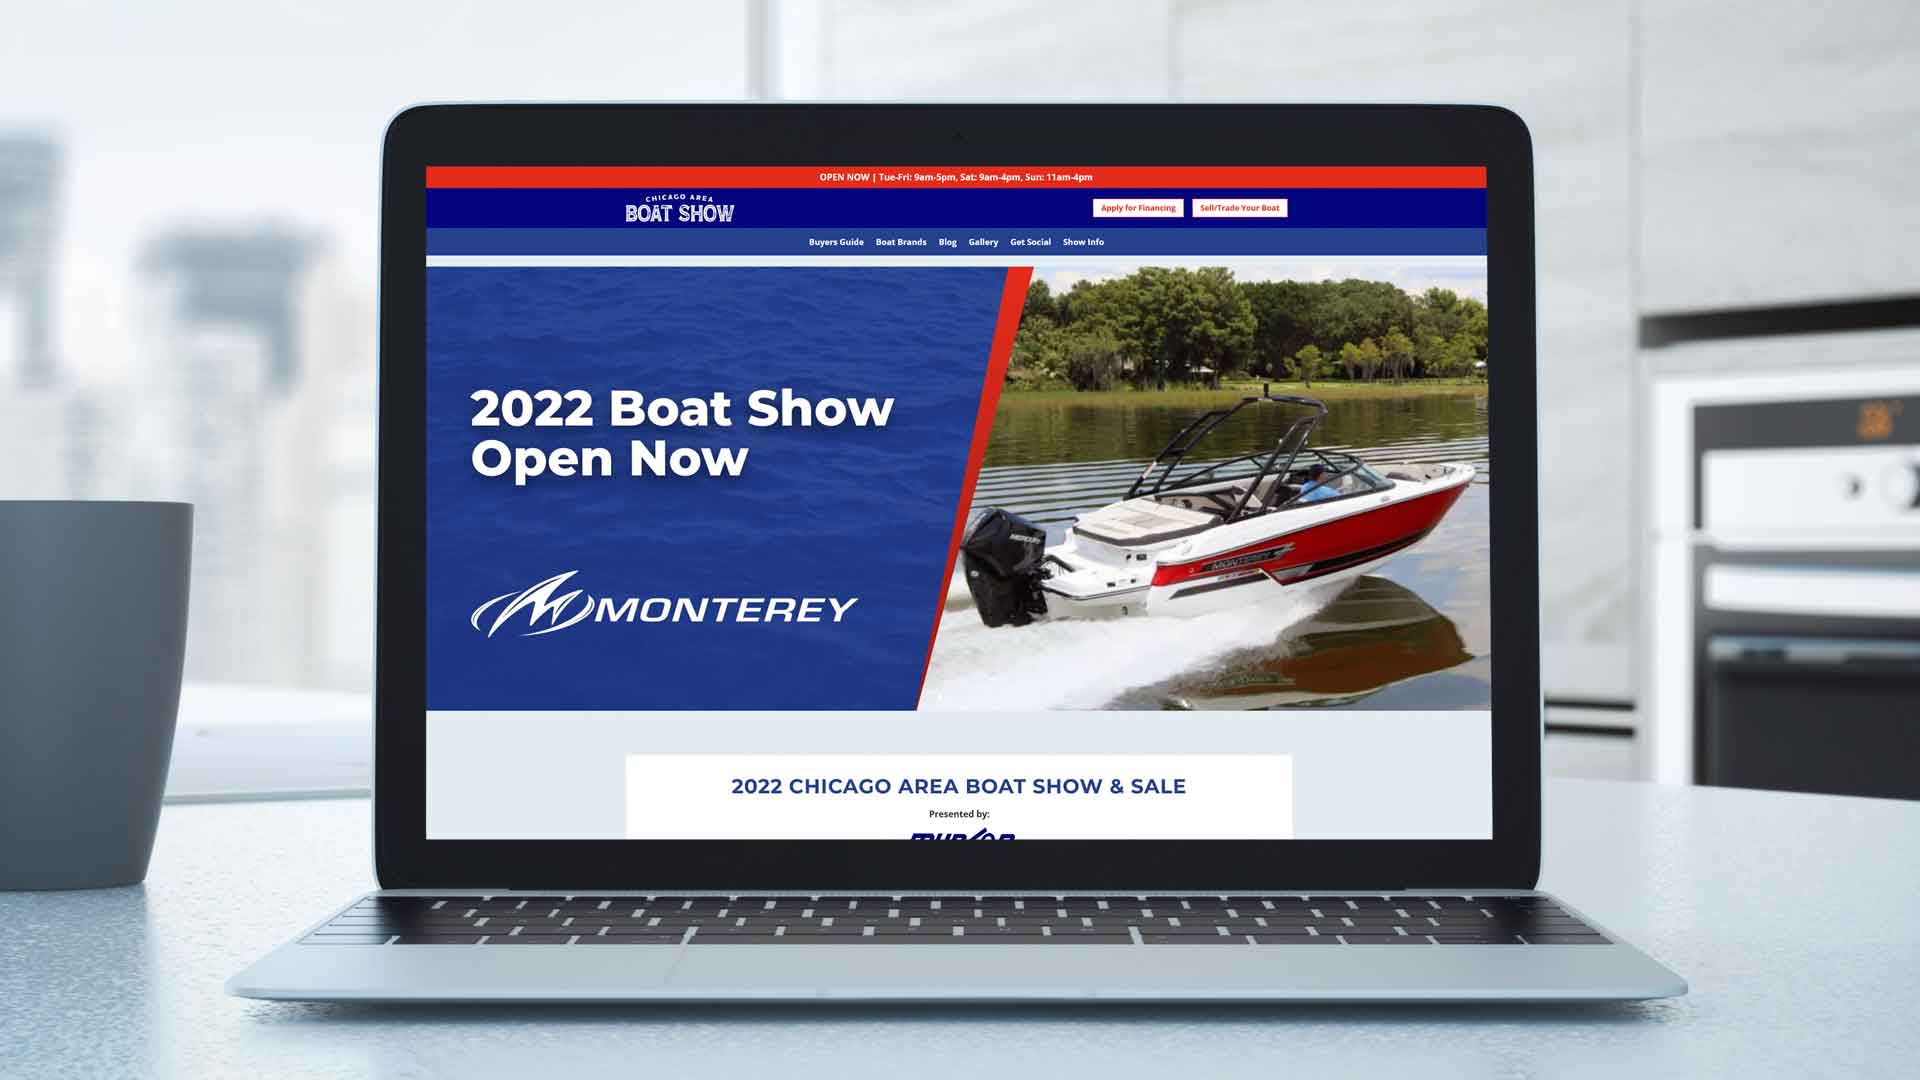 Tag Marketing Web Design - Chicago Area Boat Show